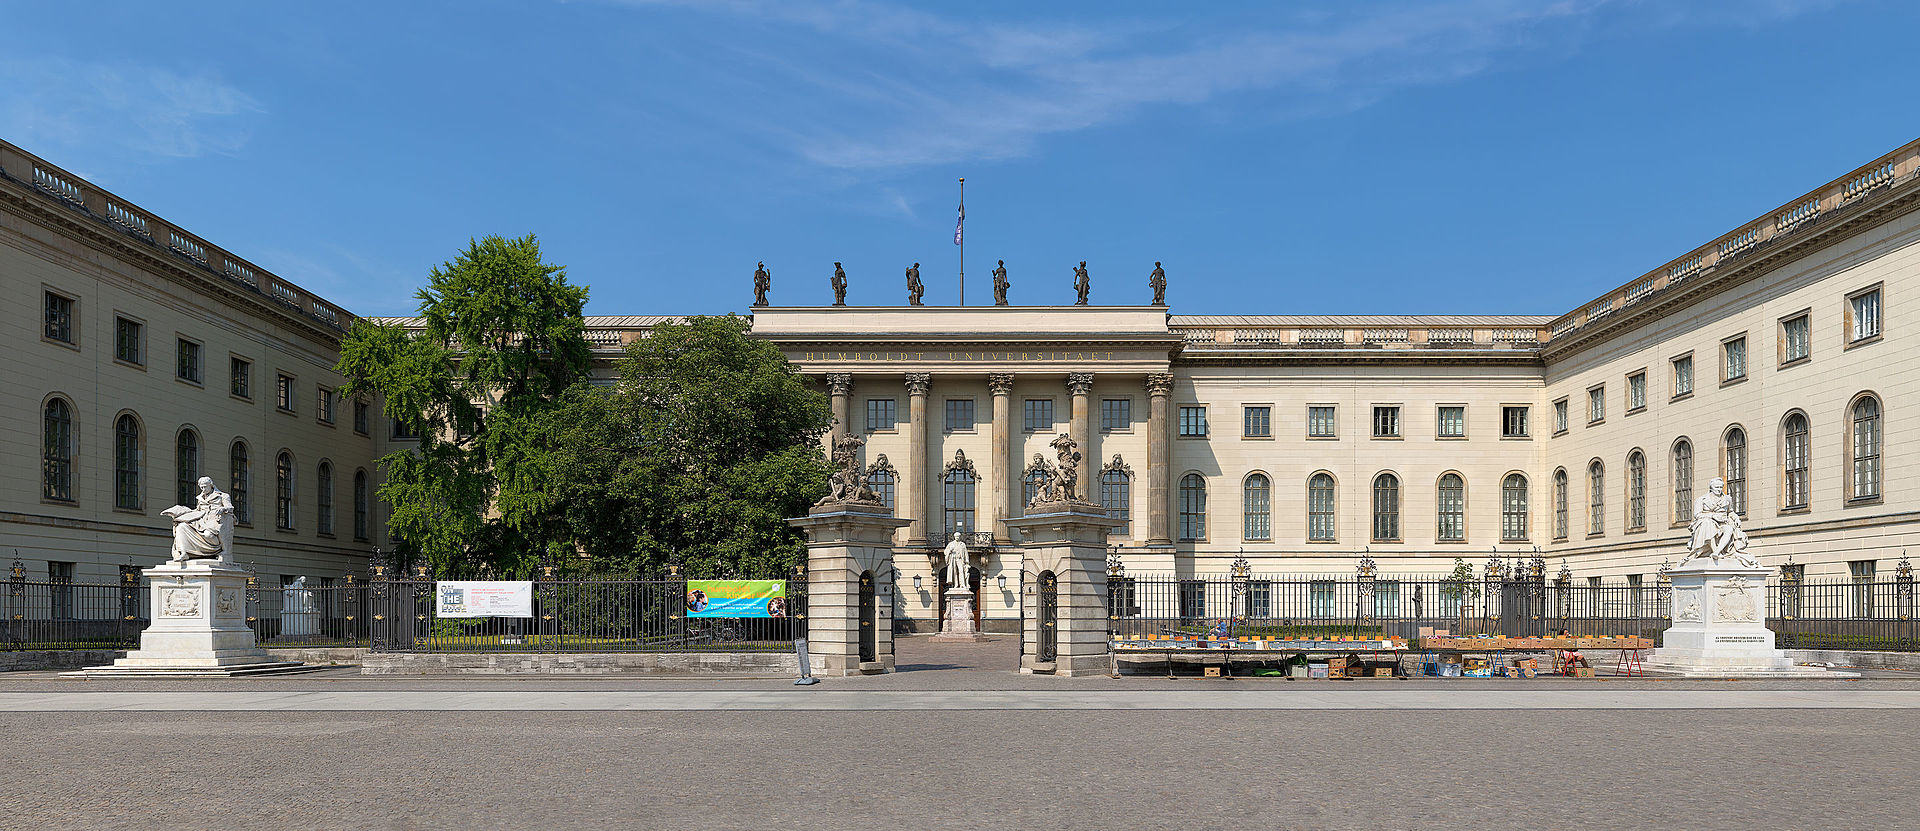 Alexander von Humboldt Denkmal Humboldt Universität zu Berlin